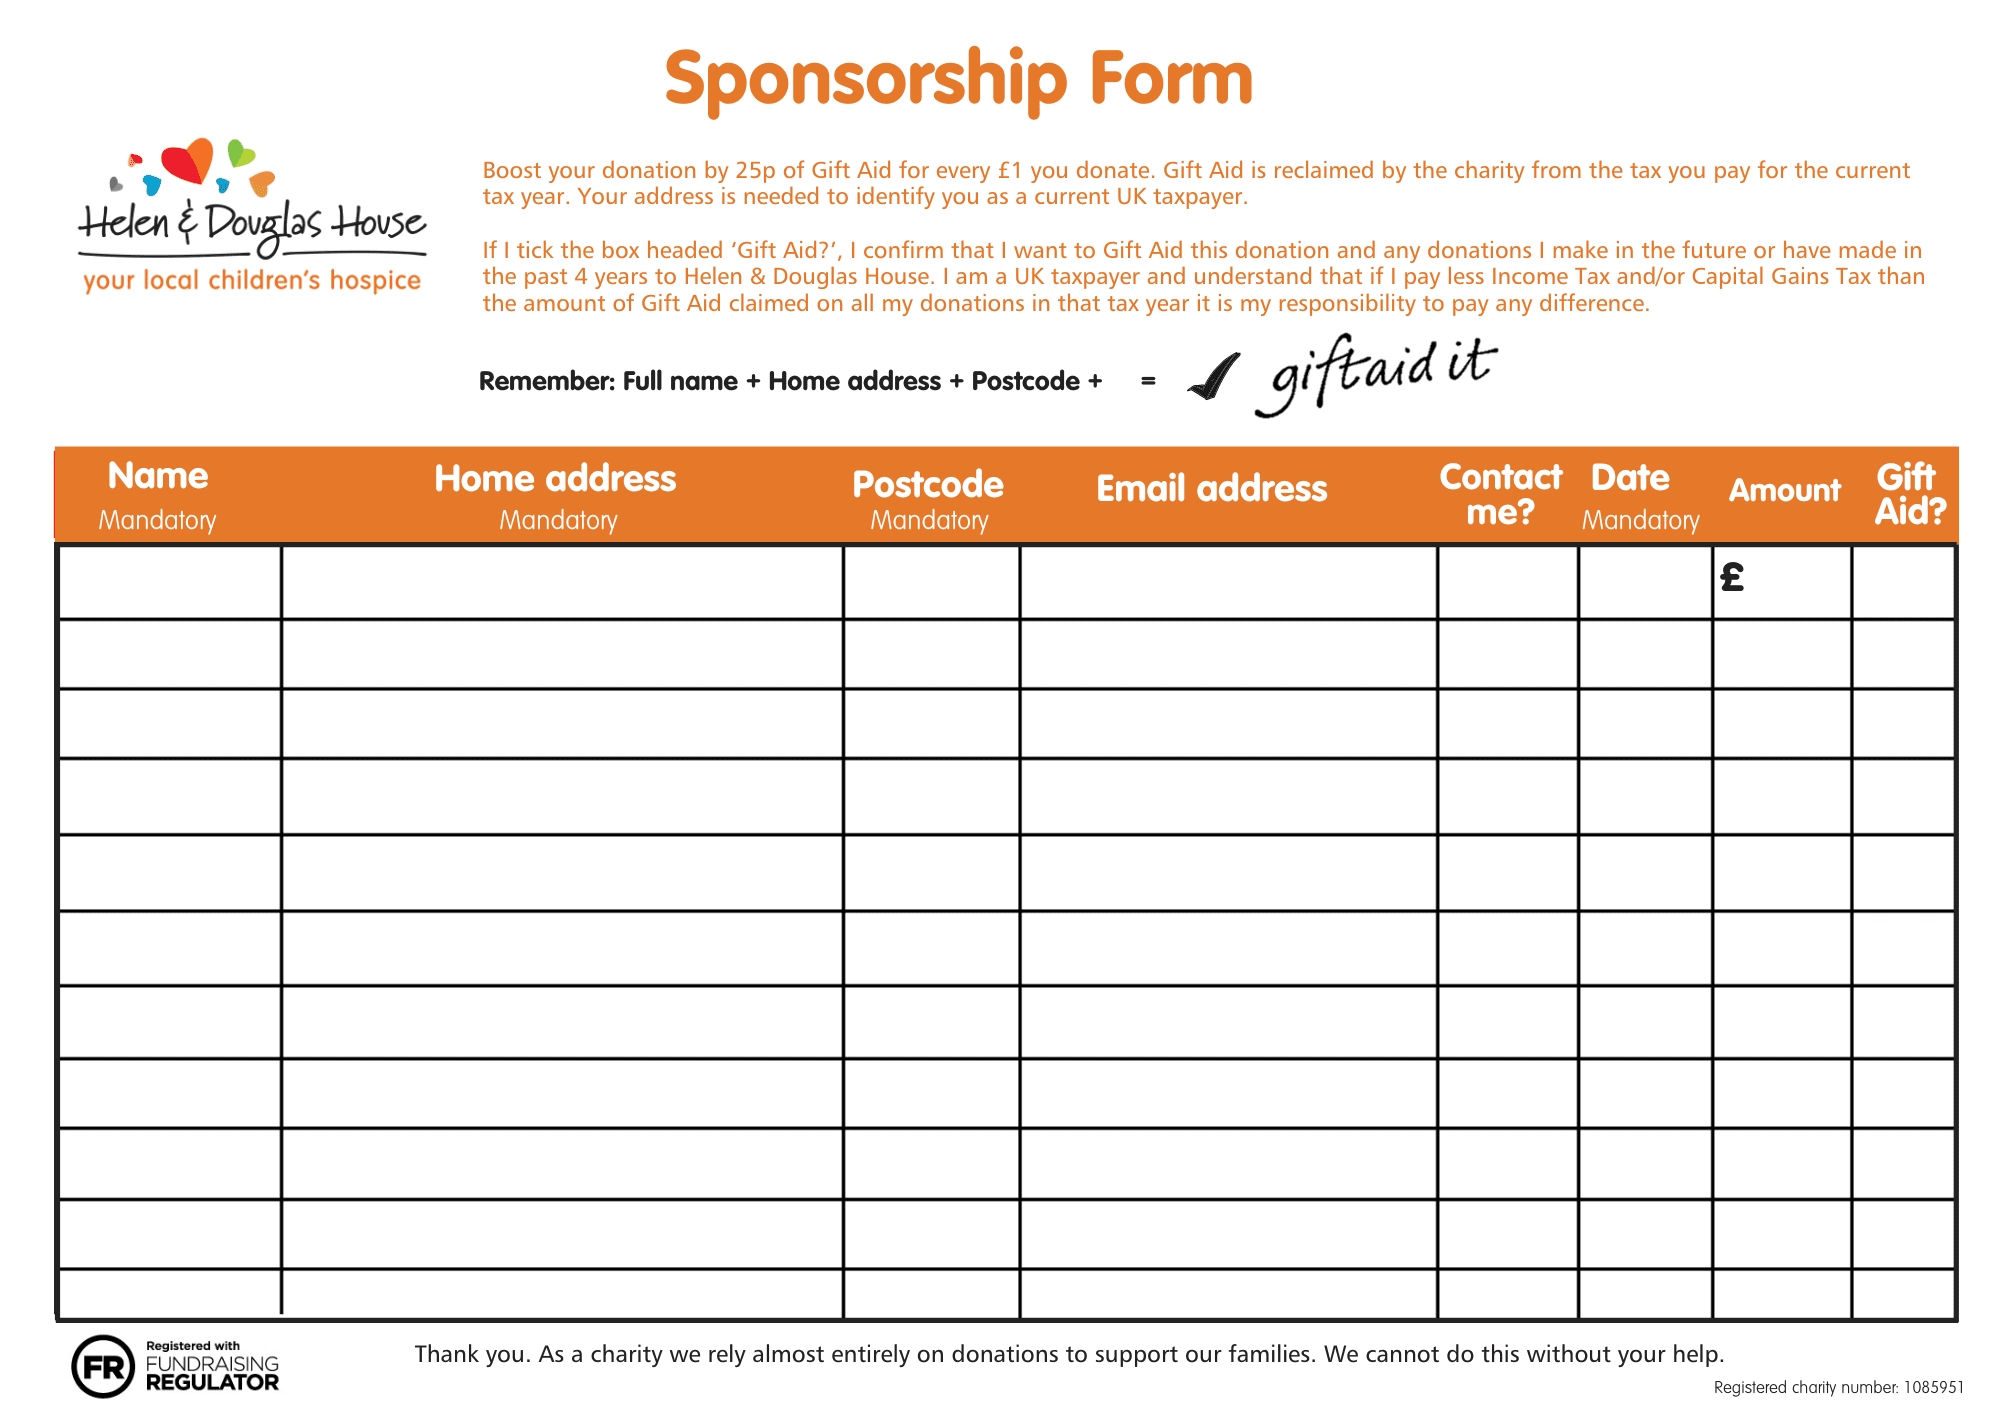 Sponsorship_form_HDH